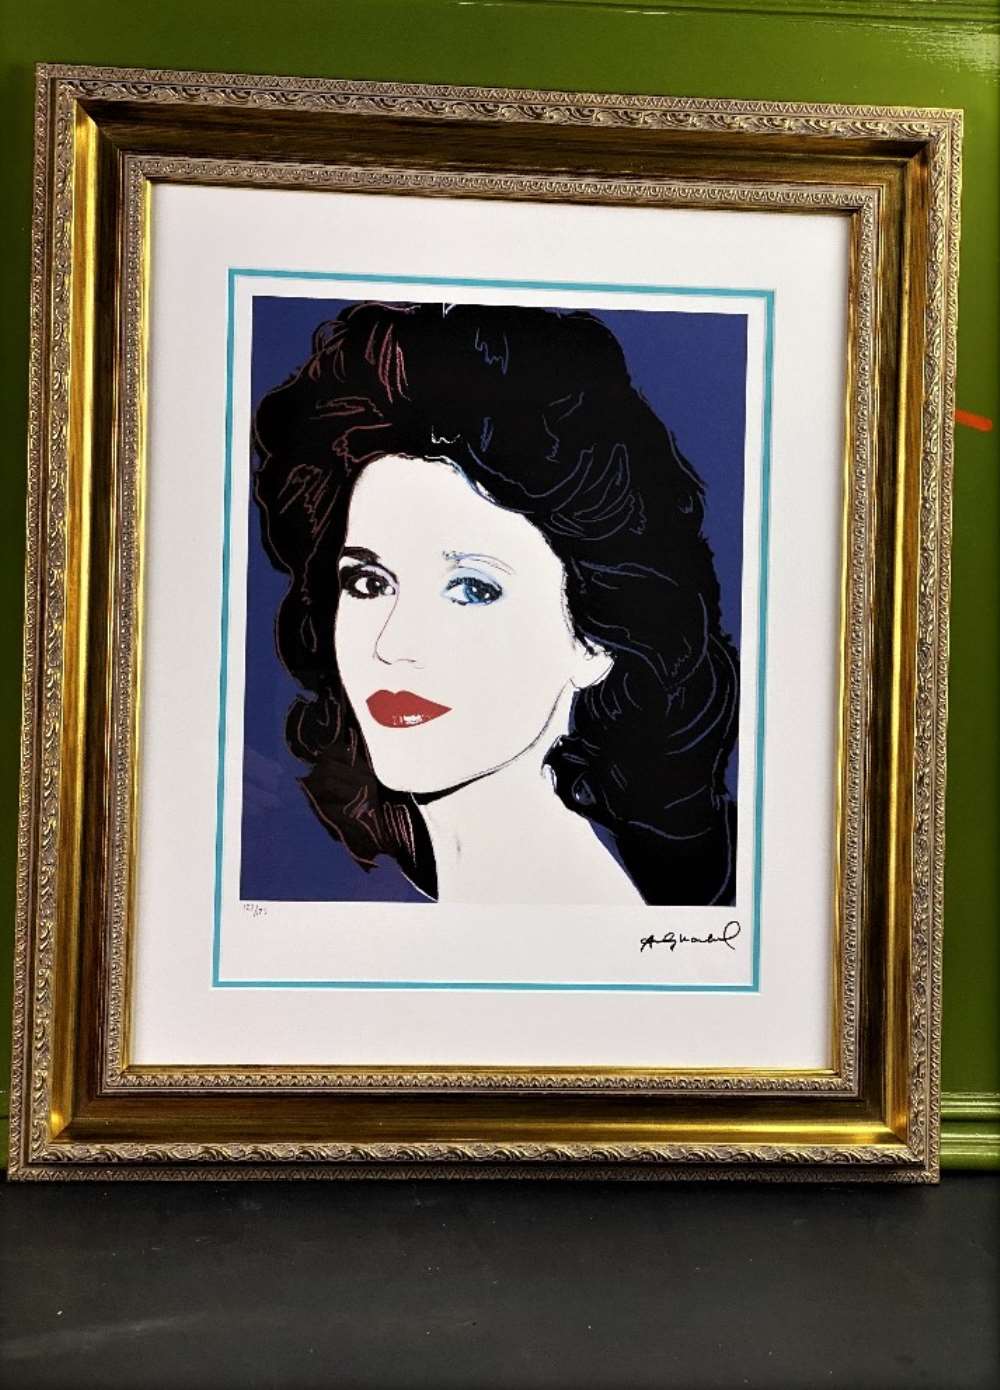 SOLD VIA BUY IT NOW -PLEASE DO NOT BID- Andy Warhol (1928-1987) Jane Fonda Ltd Edition Lithograph - Image 7 of 7